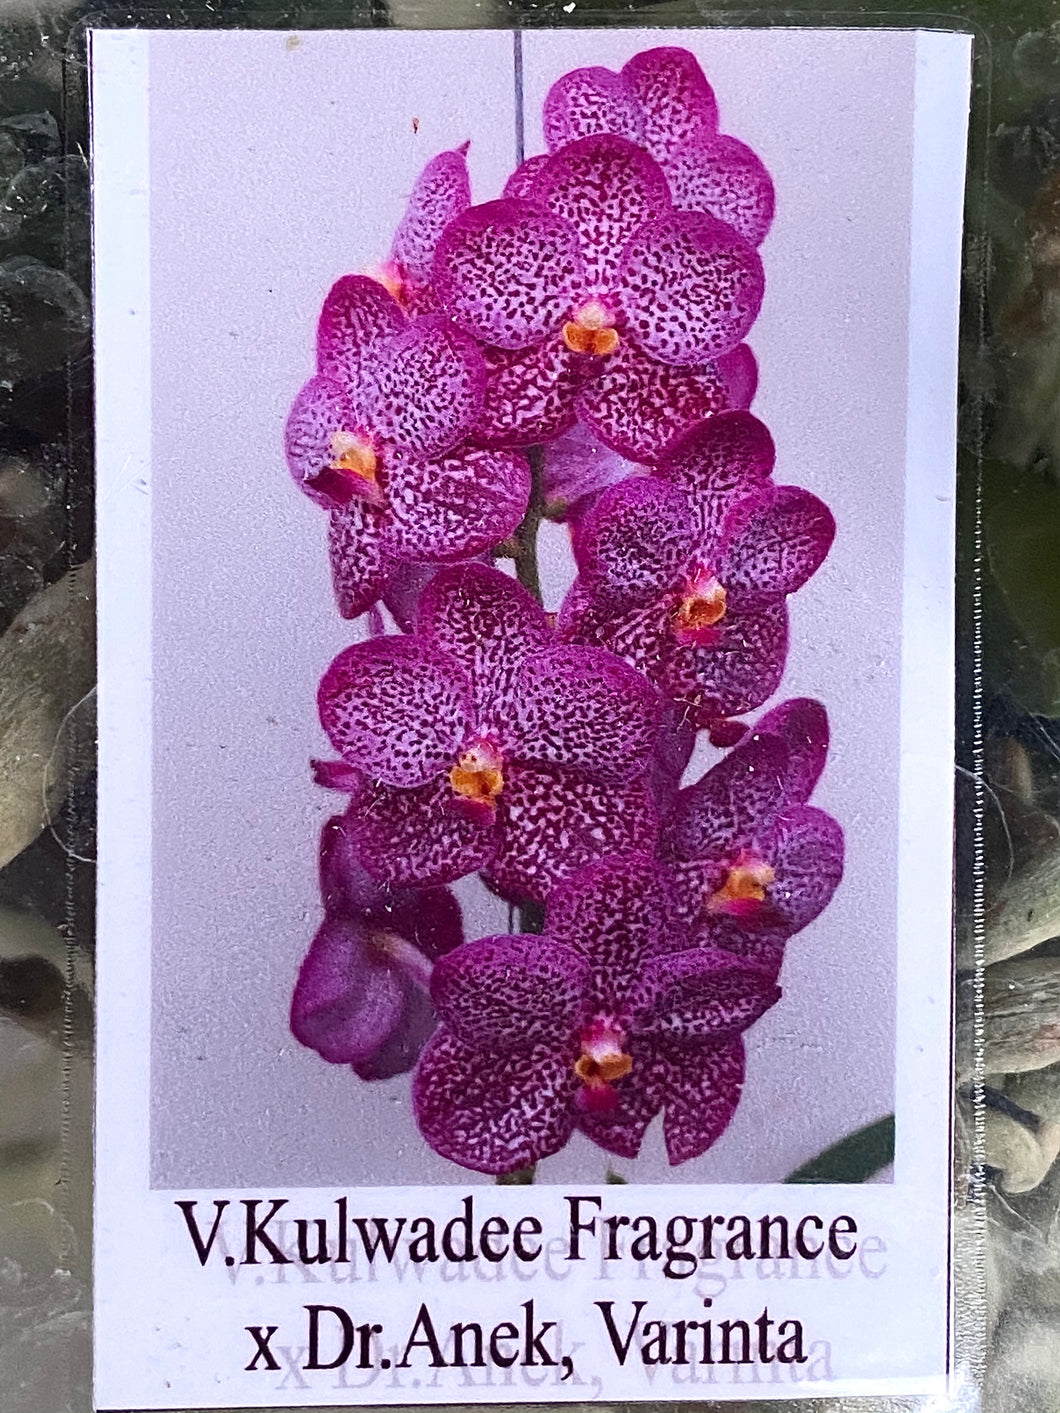 V. Kulwadee Fragrance x Dr. Anek, Varinta